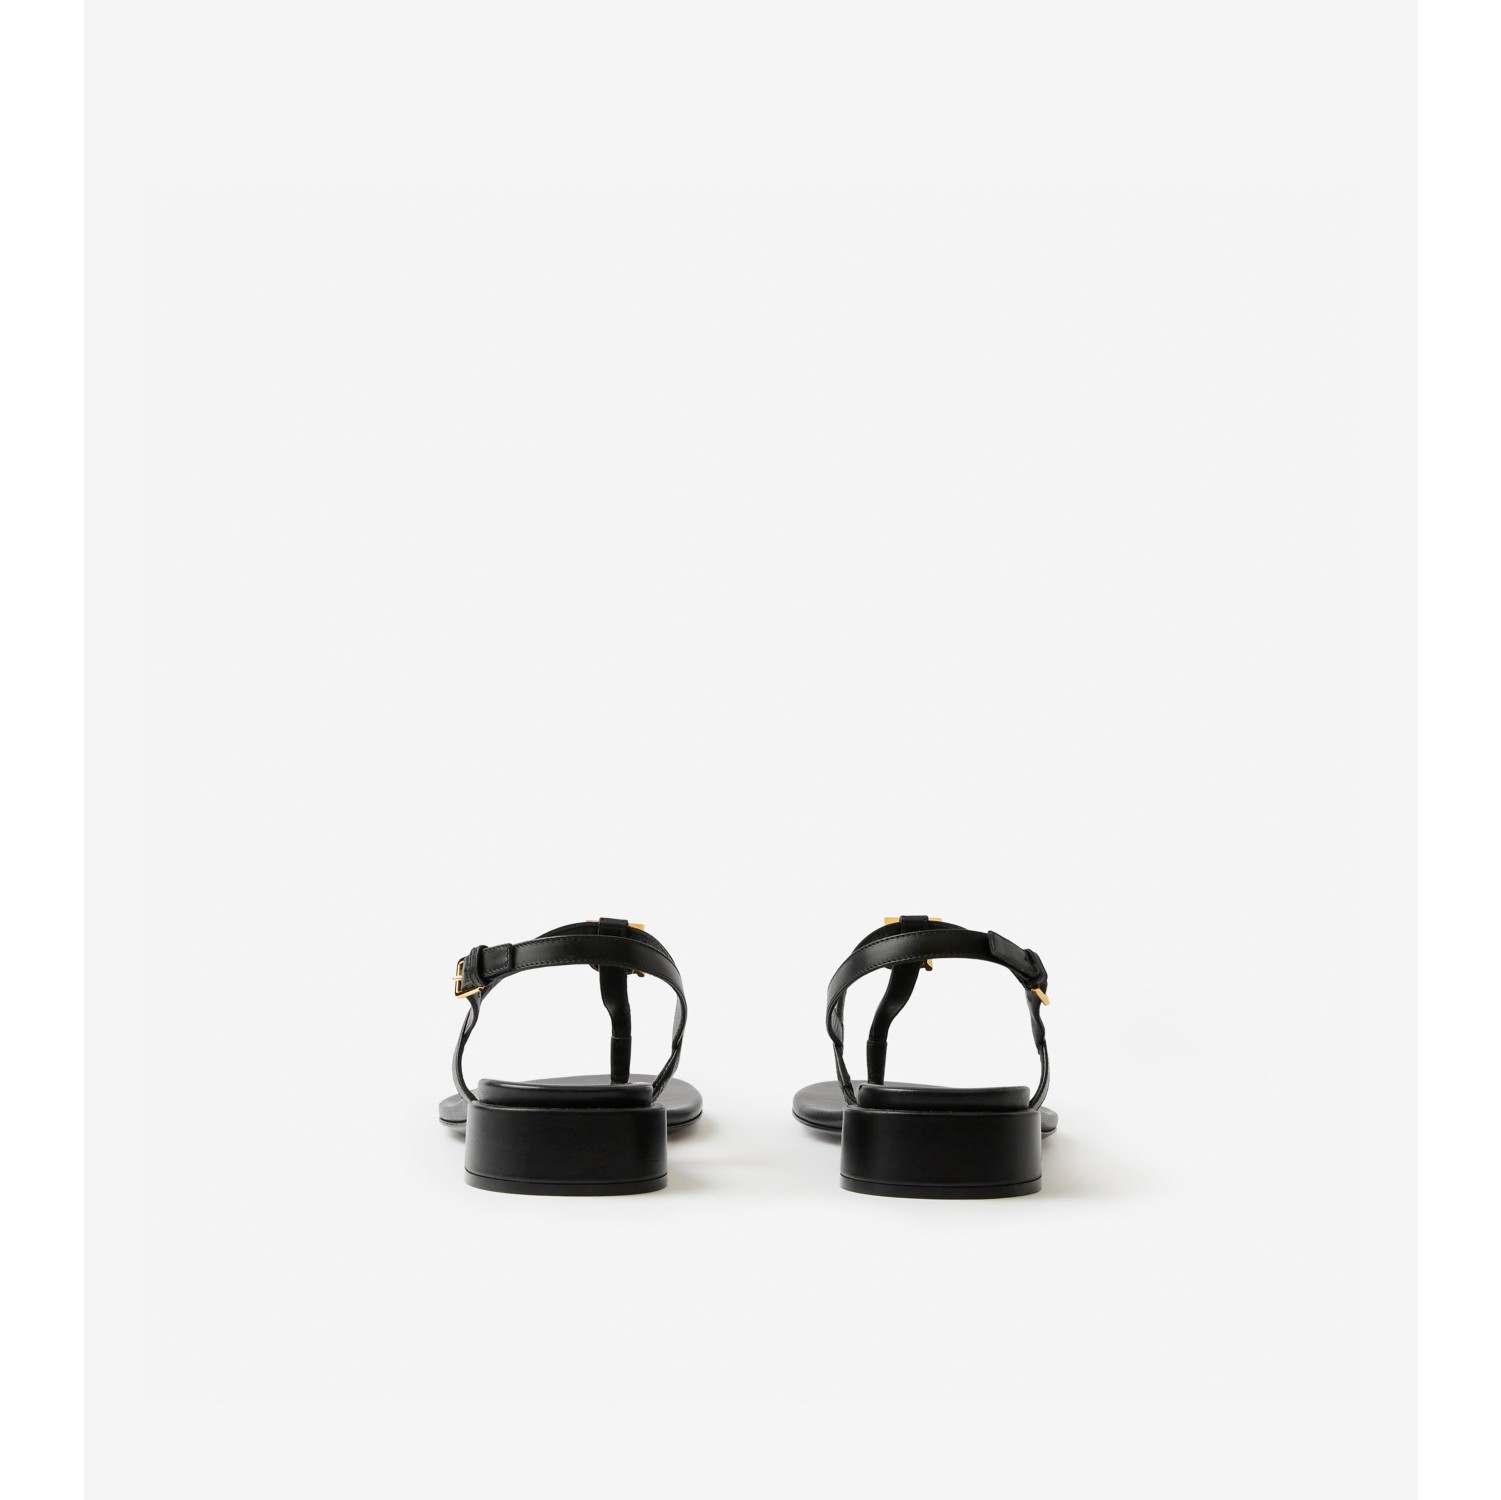 Burberry Monogram Motif Leather Sandal - ShopStyle